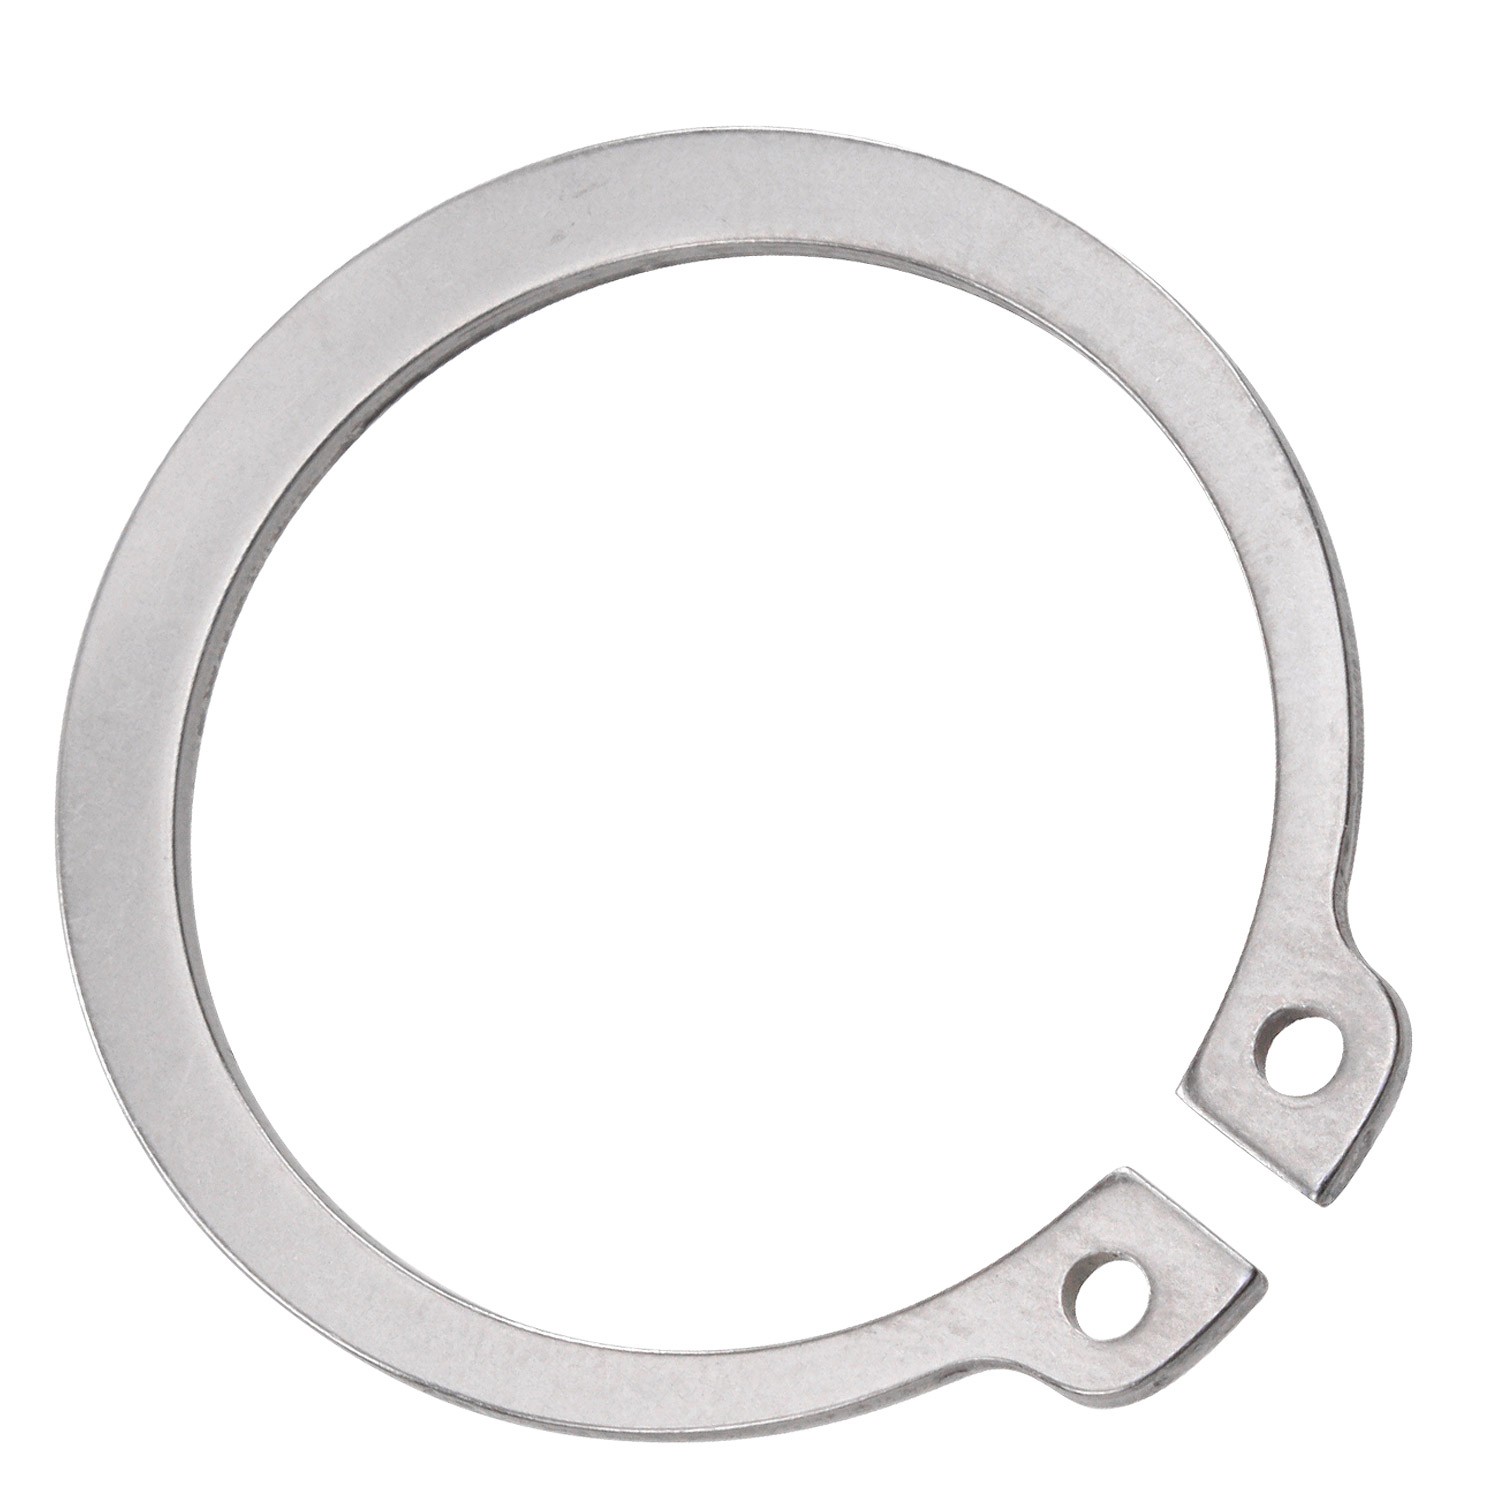 Кольцо стопорное наружное 17х1 DIN 471, нержавеющая сталь 1.4122 (А2) - фото